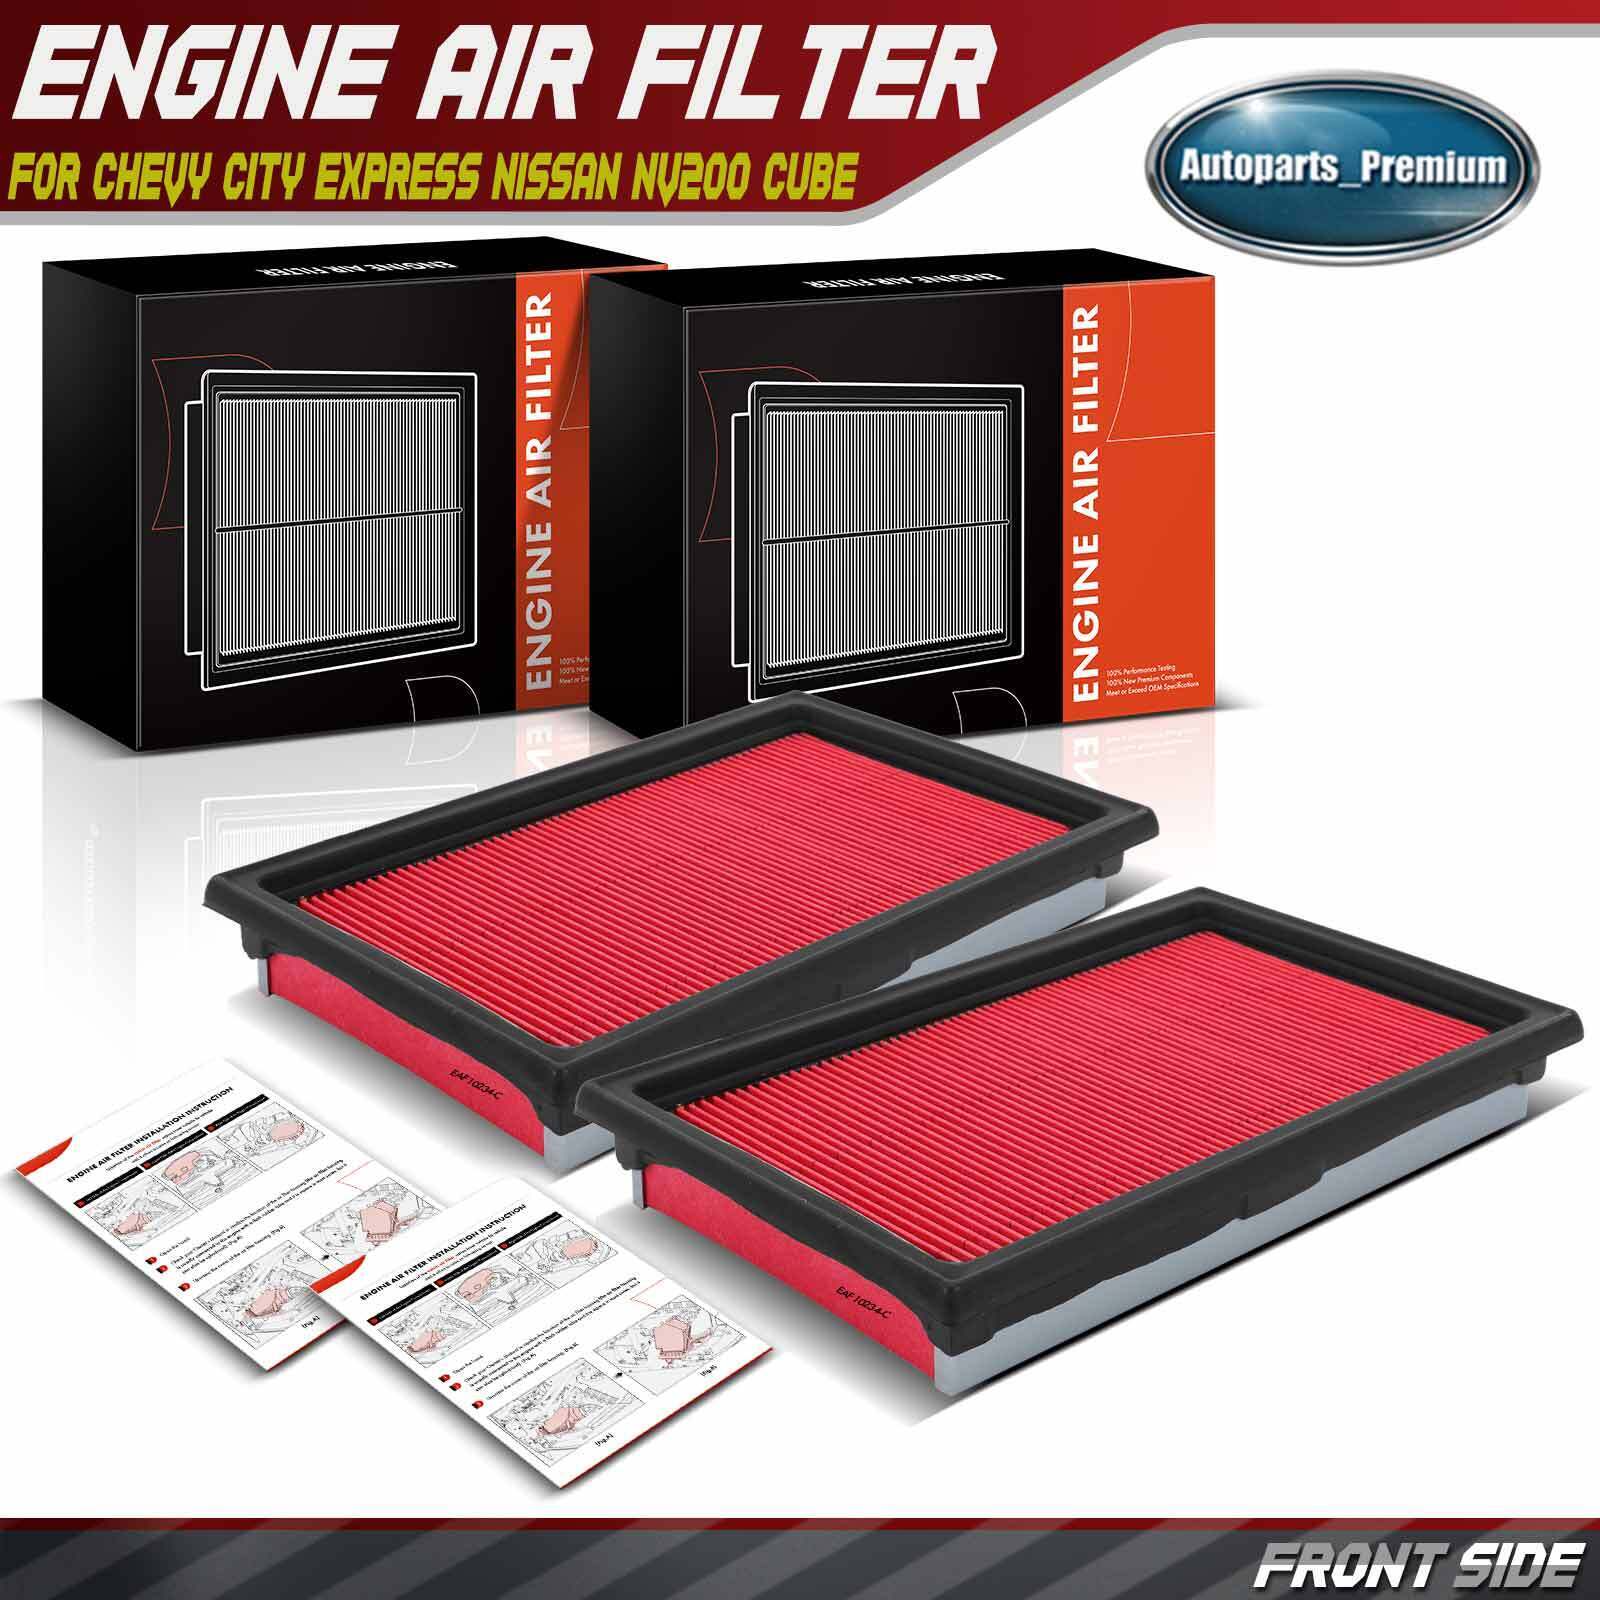 2x Engine Air Filter for Nissan Versa Cube NV200 Chevy City Express INFINITI Q50